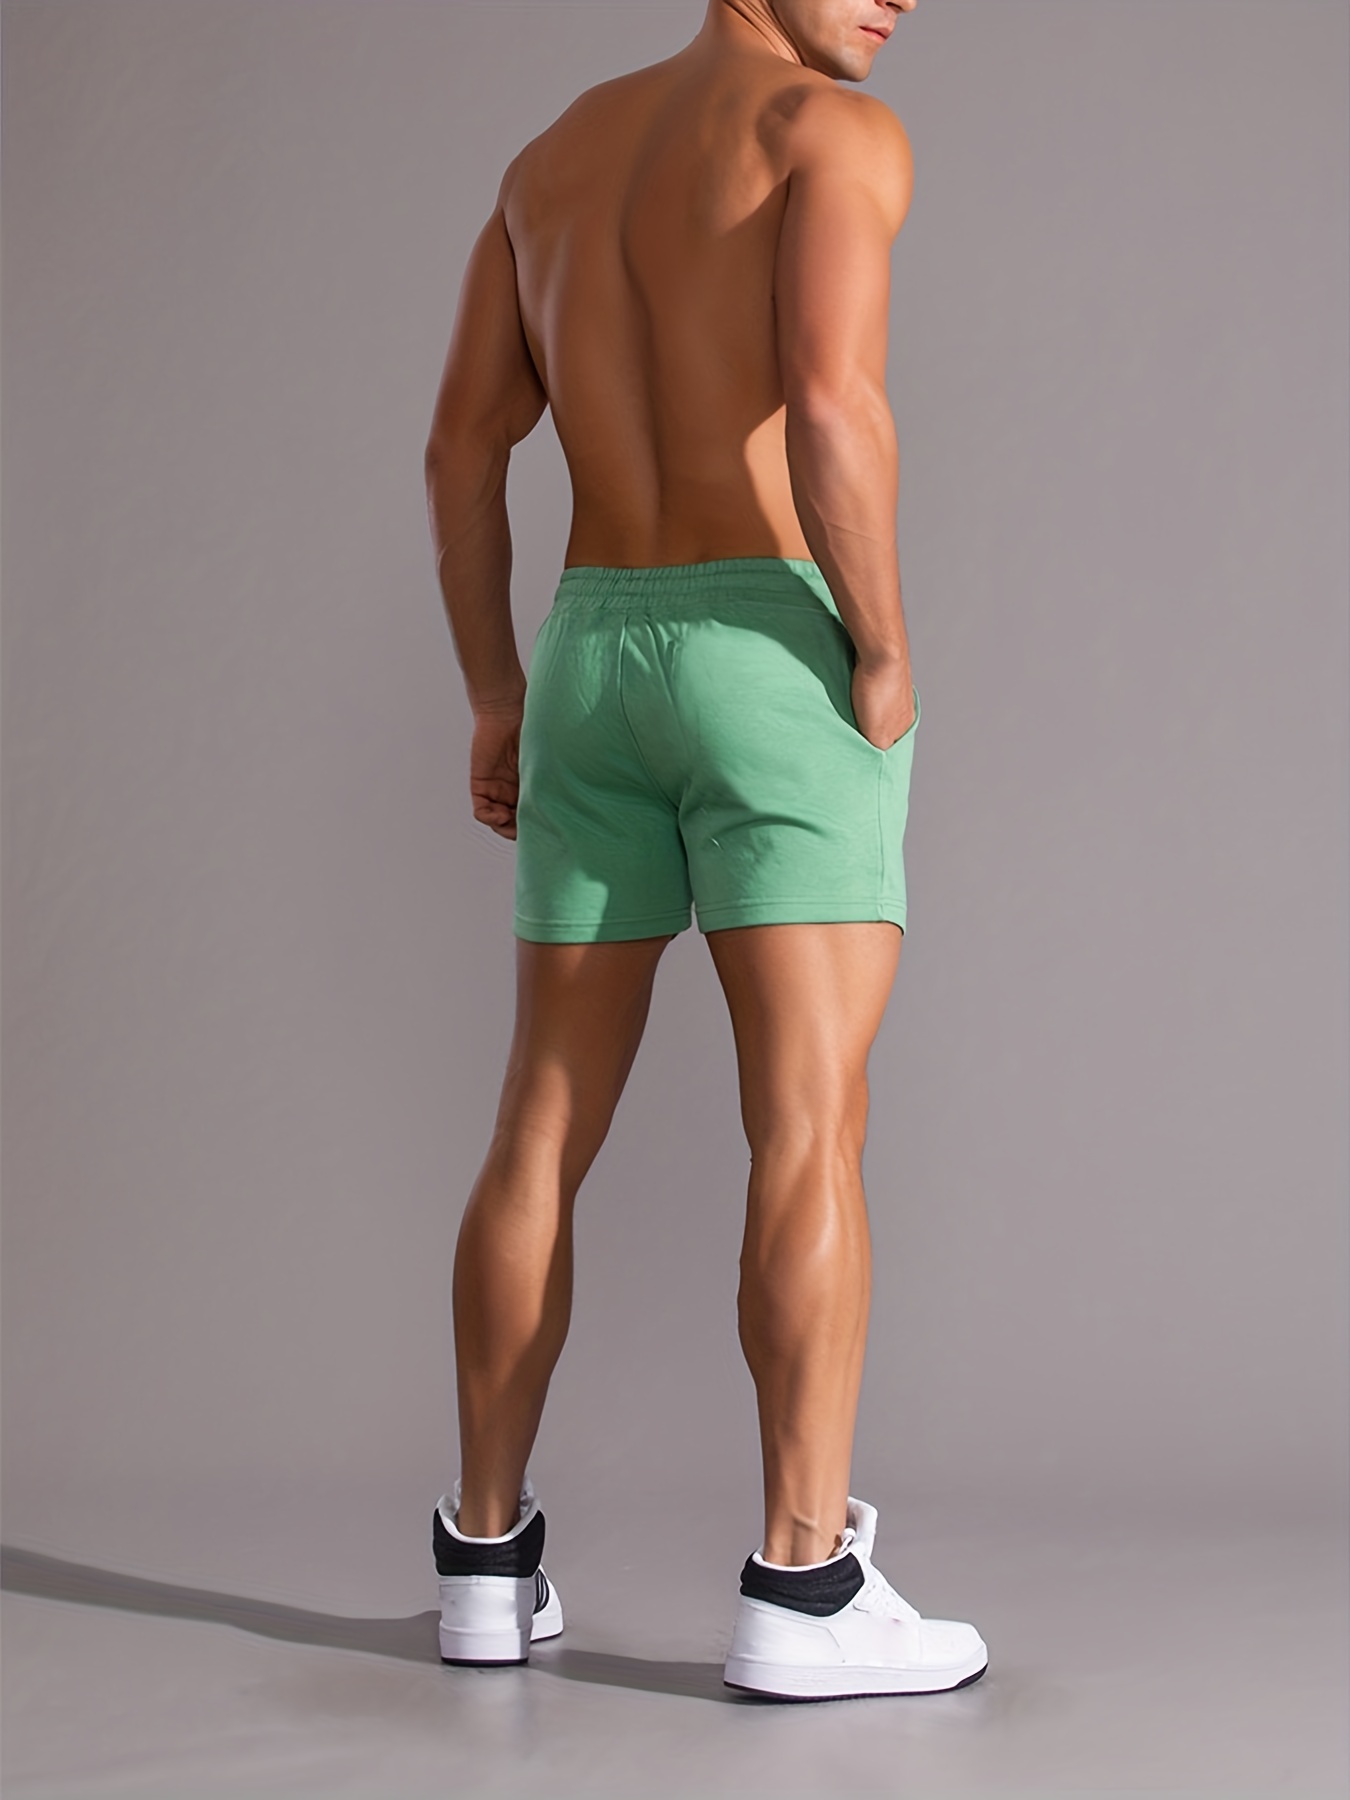 Pantalones Cortos Deporte Hombre Pantalon Corto Hombre Deporte Bermudas  para Hombre Gym Verano Atletismo (HSJ21-ejercito Verde,S): : Moda